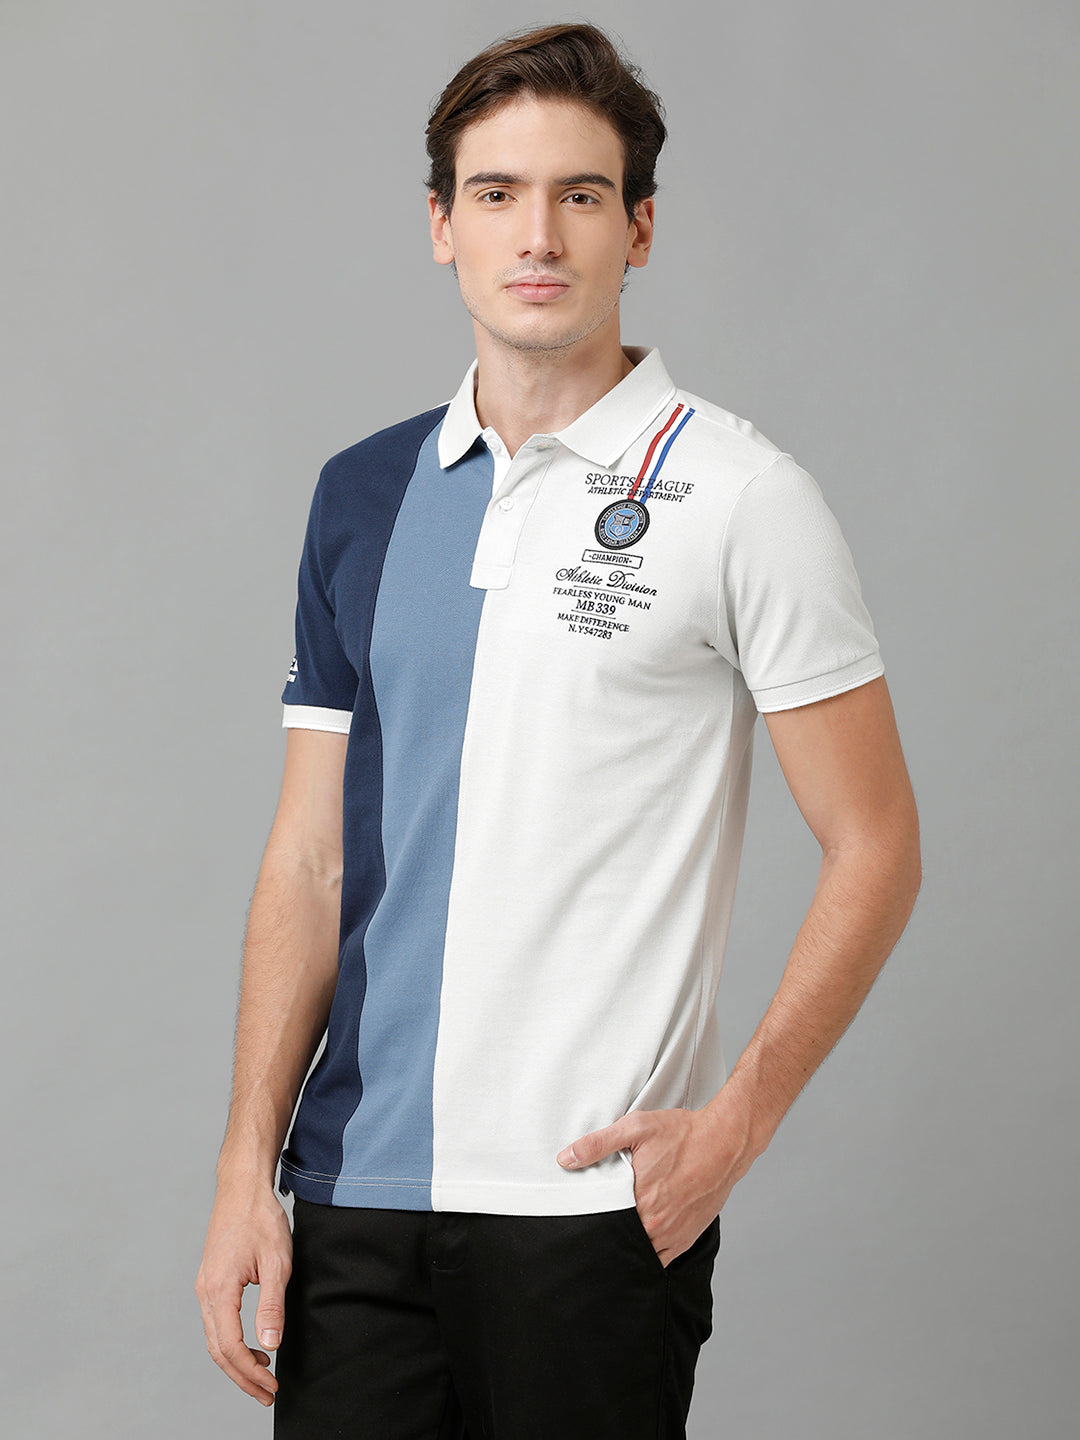 Buy CP BRO Men's Slim Fit T-Shirt (HS-BRP-342A_Navy_M) at